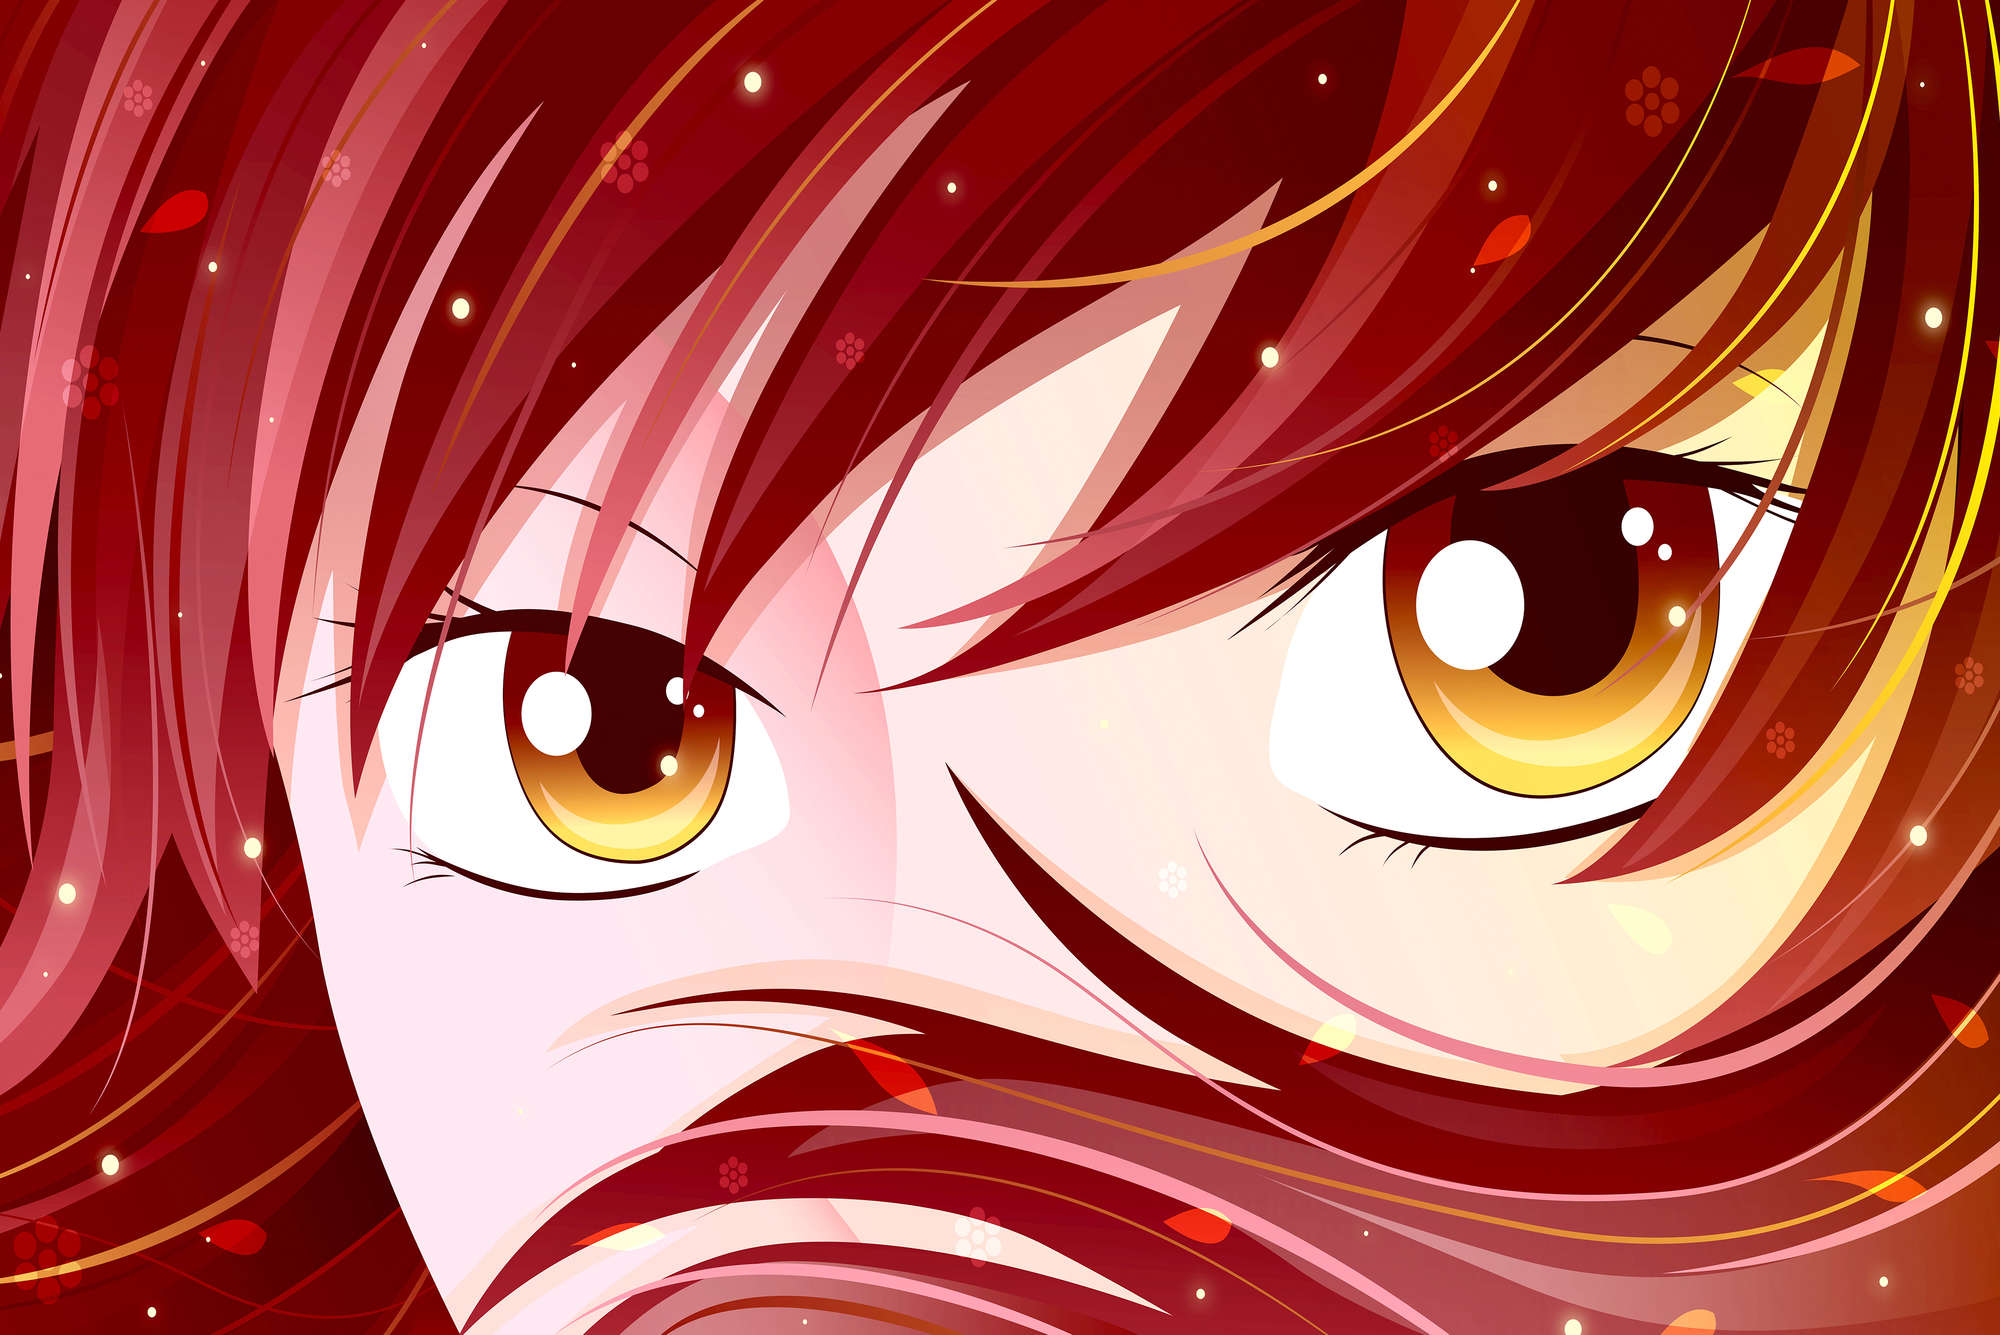             Manga photo wallpaper redhead girl on textured non-woven
        